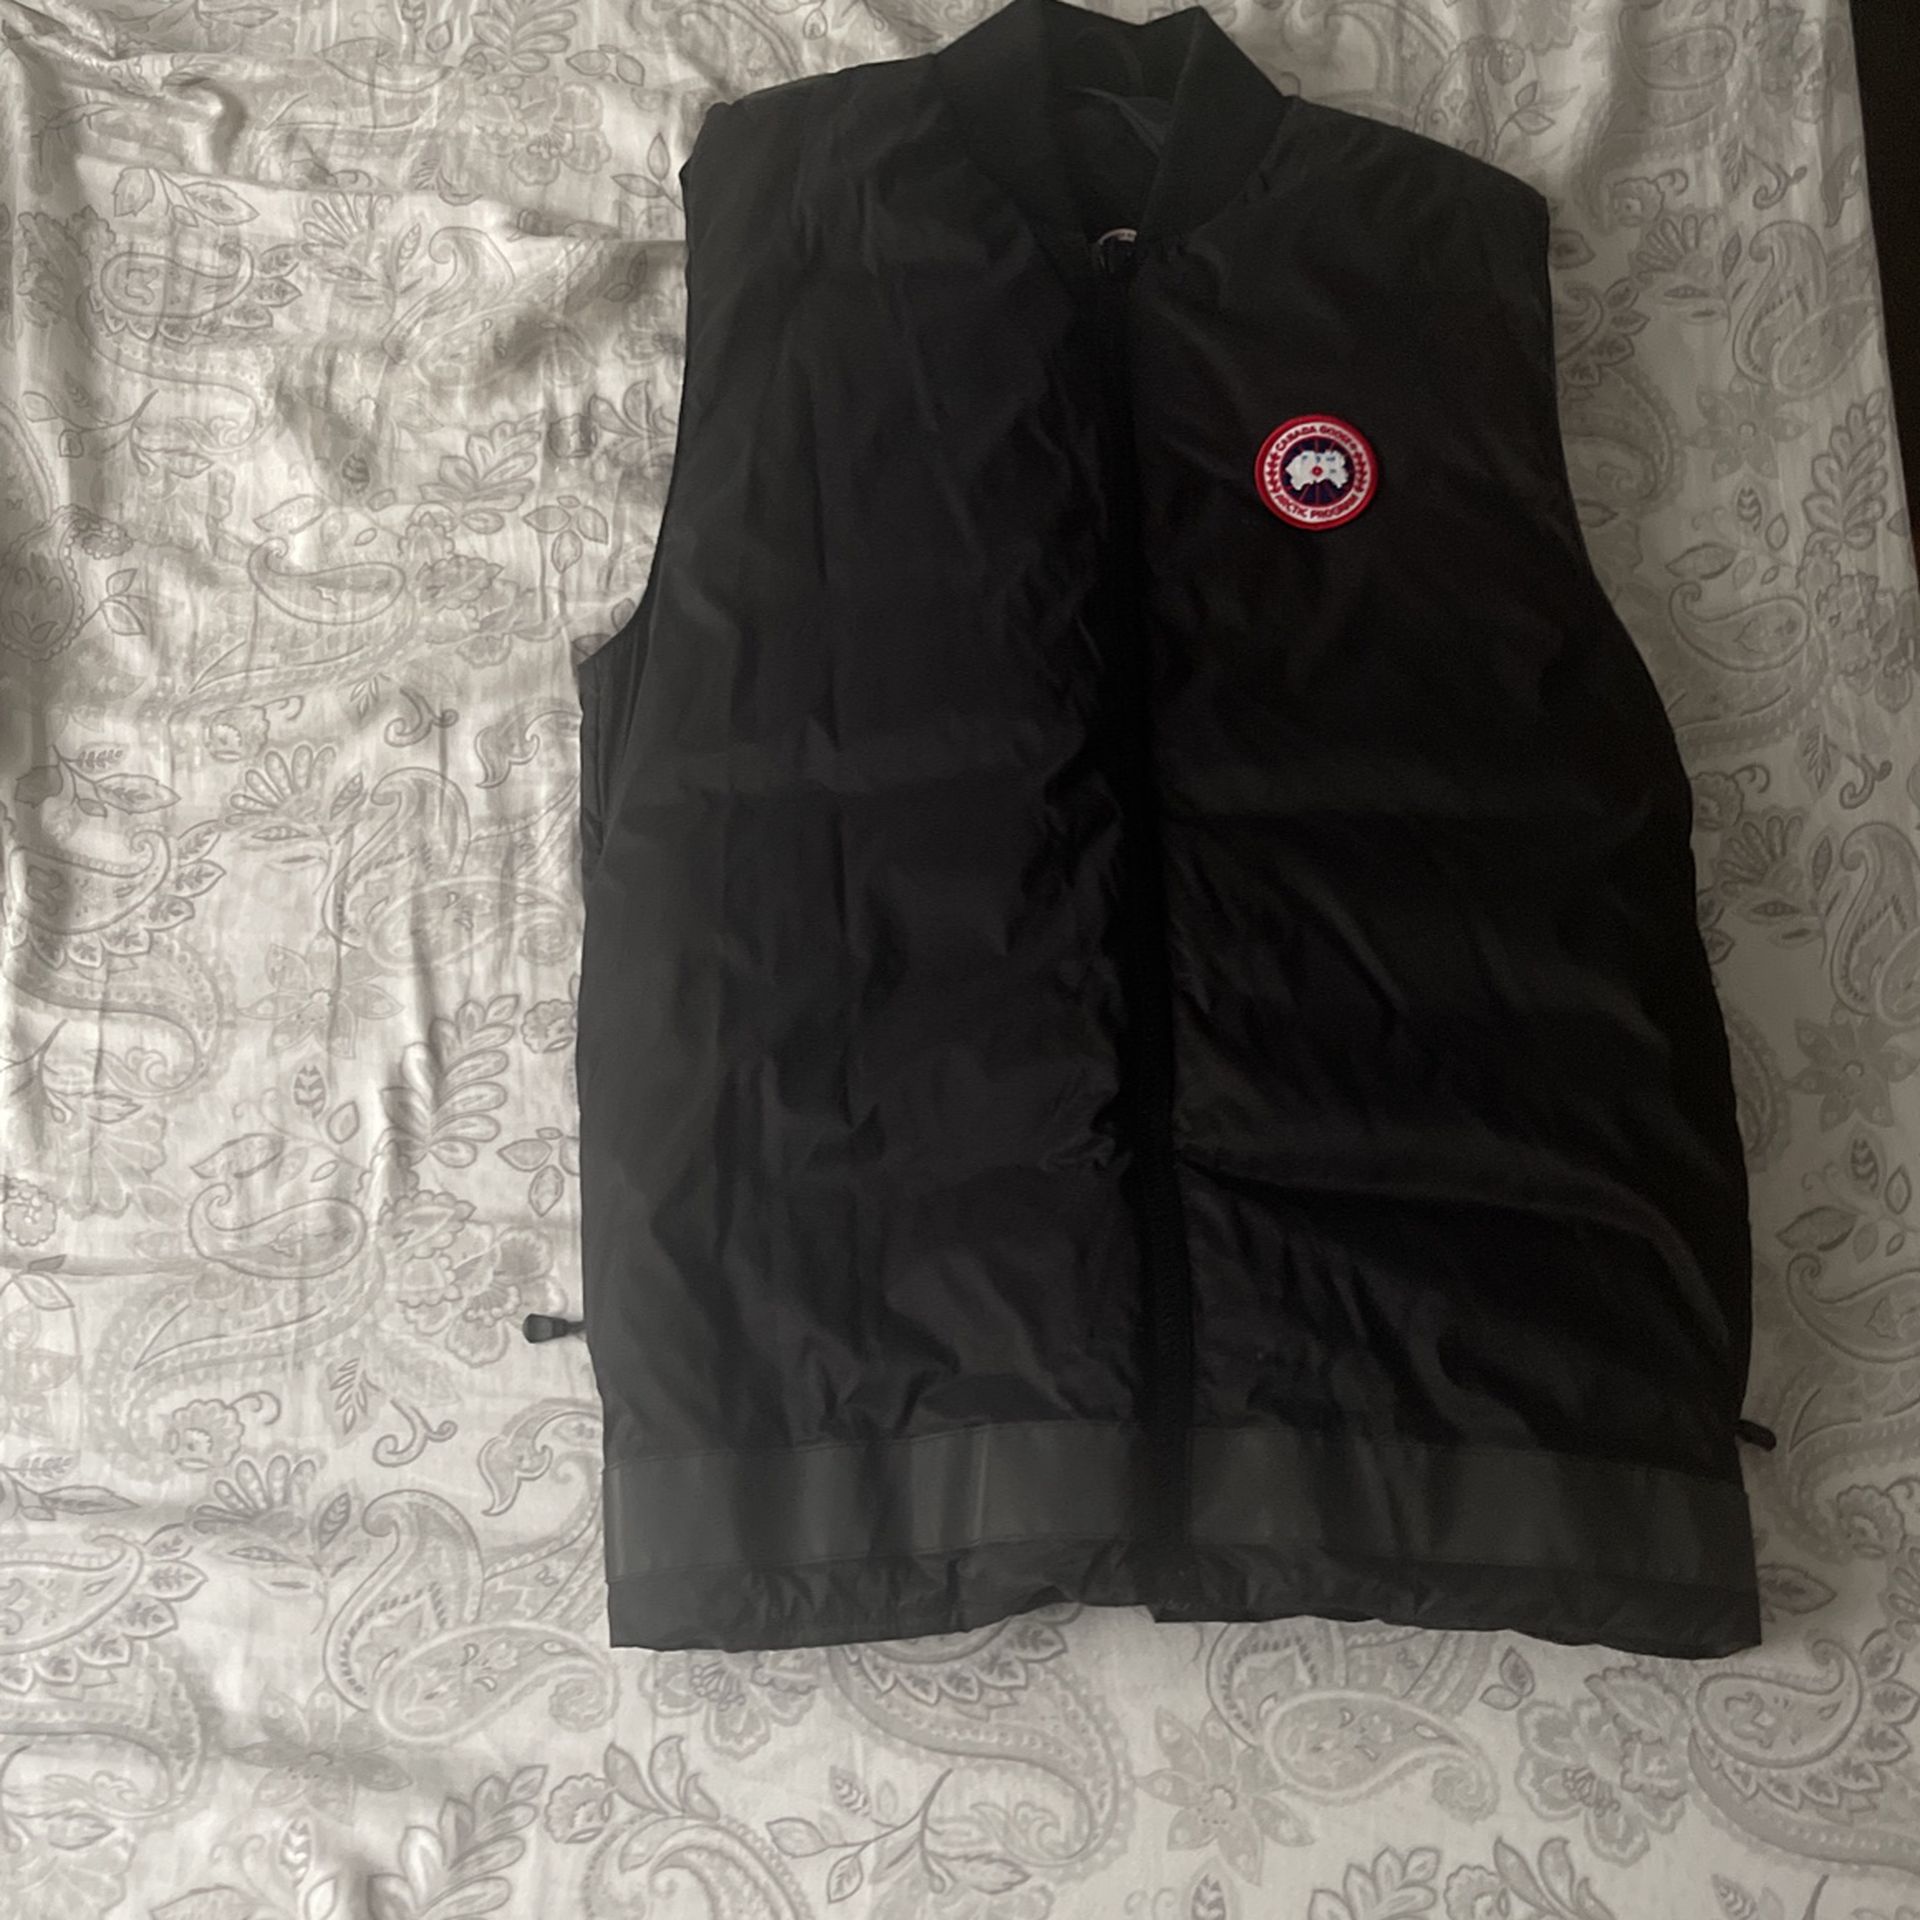 Canada Goose vest, black, size small.